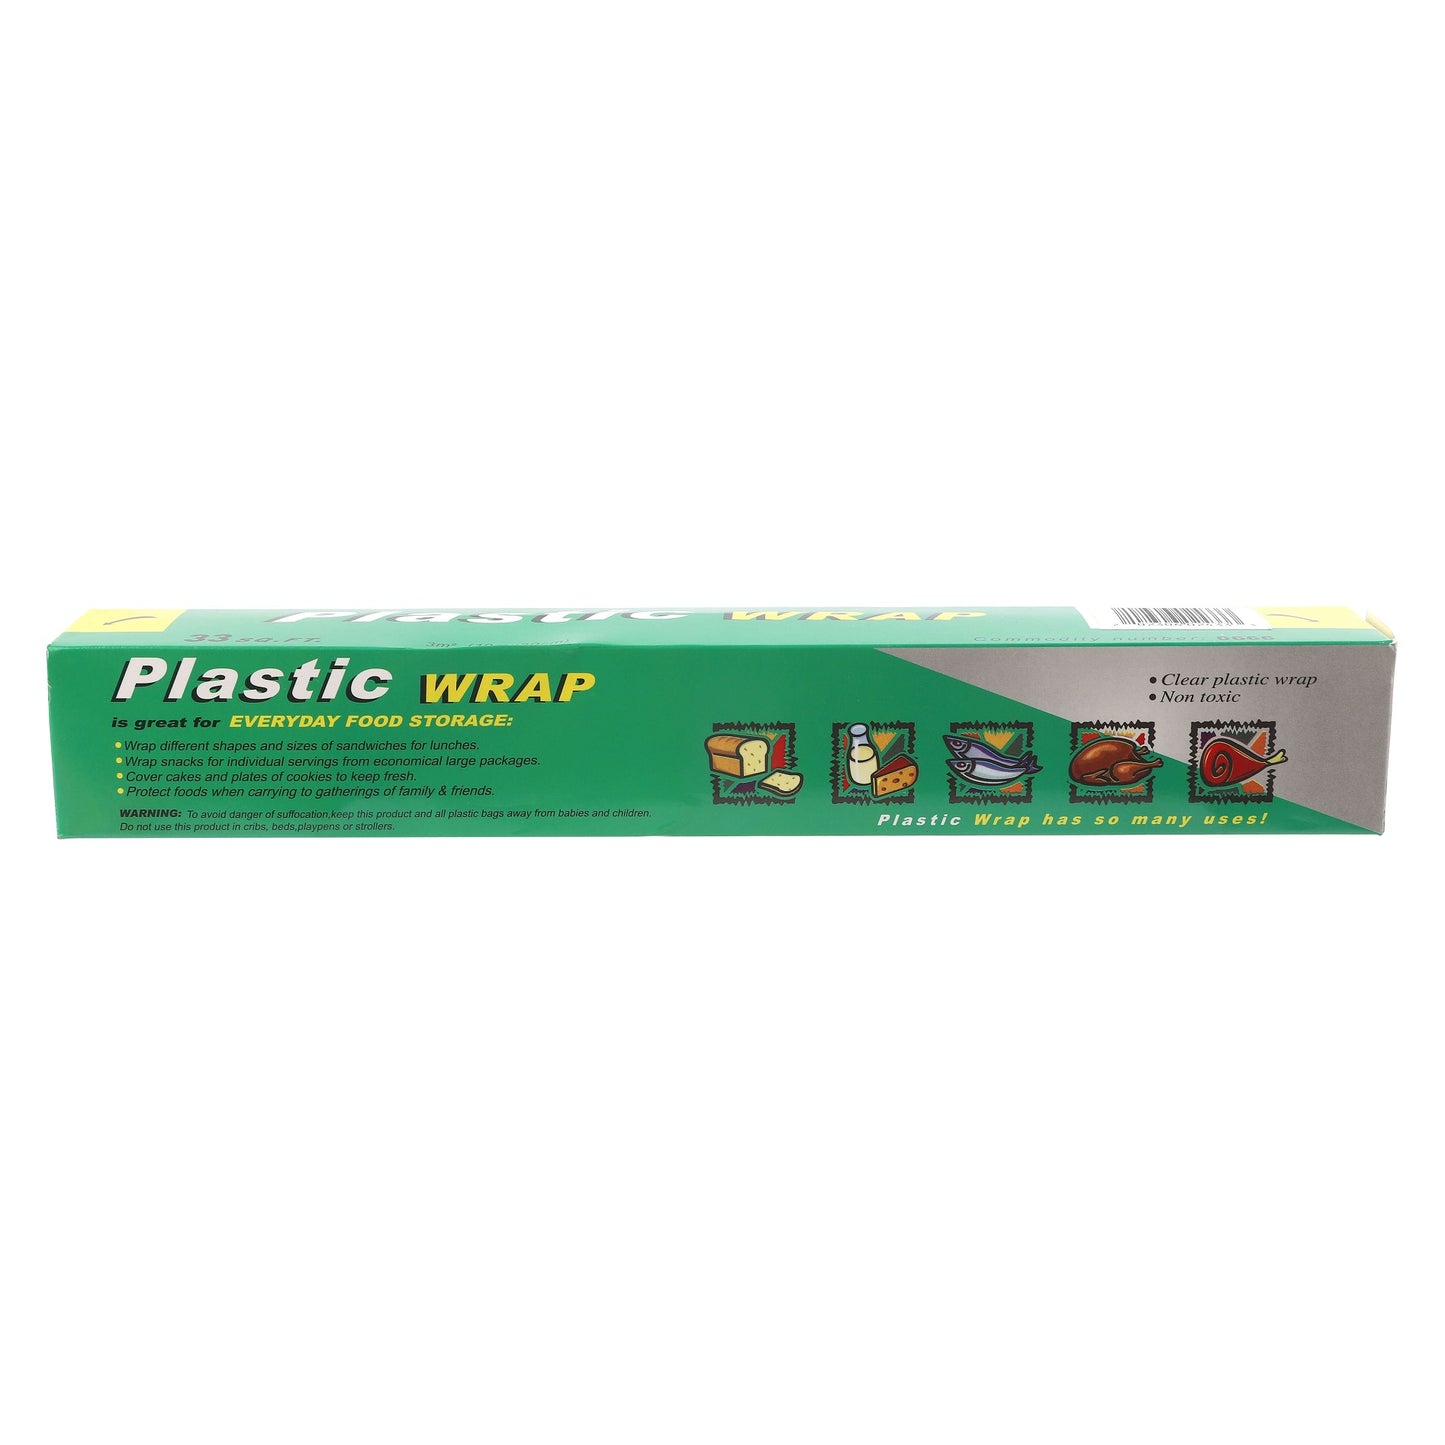 Cling Film/Plastic Wrap